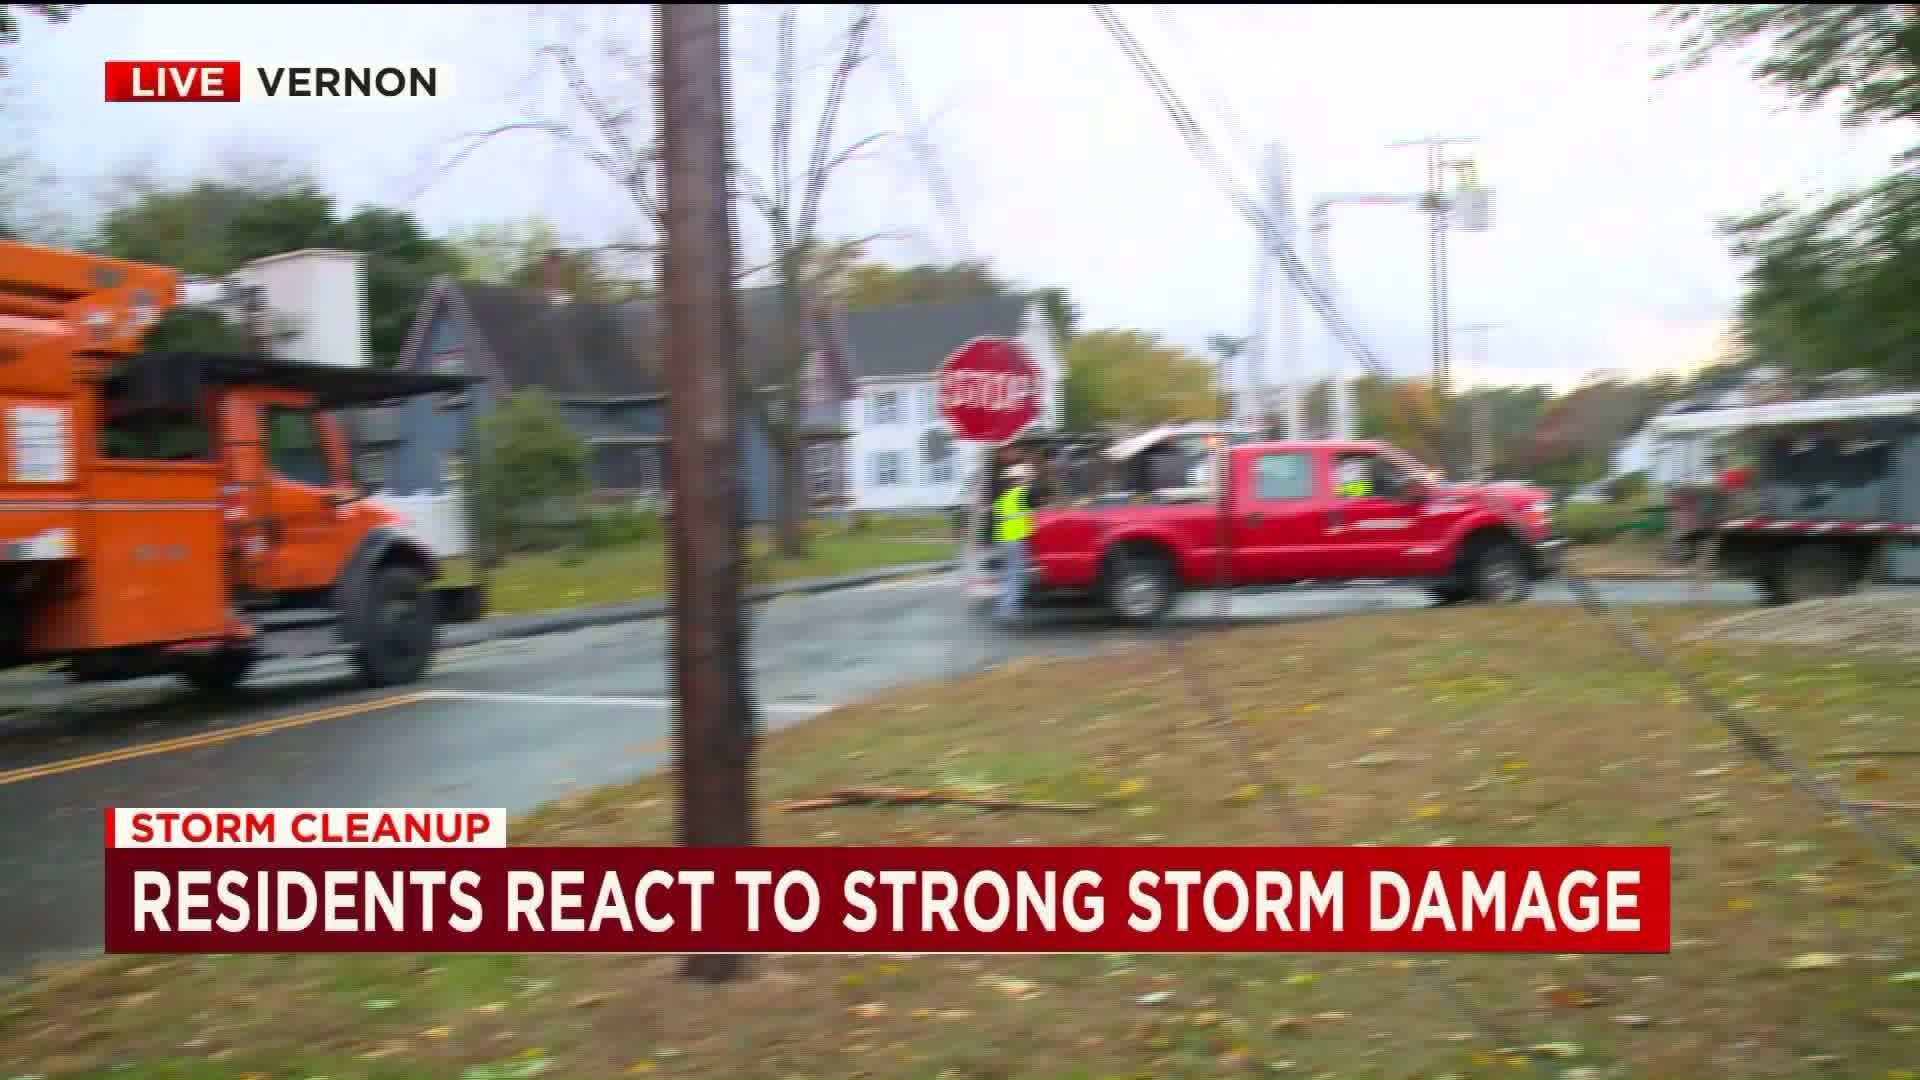 Storm damage in Vernon, CT